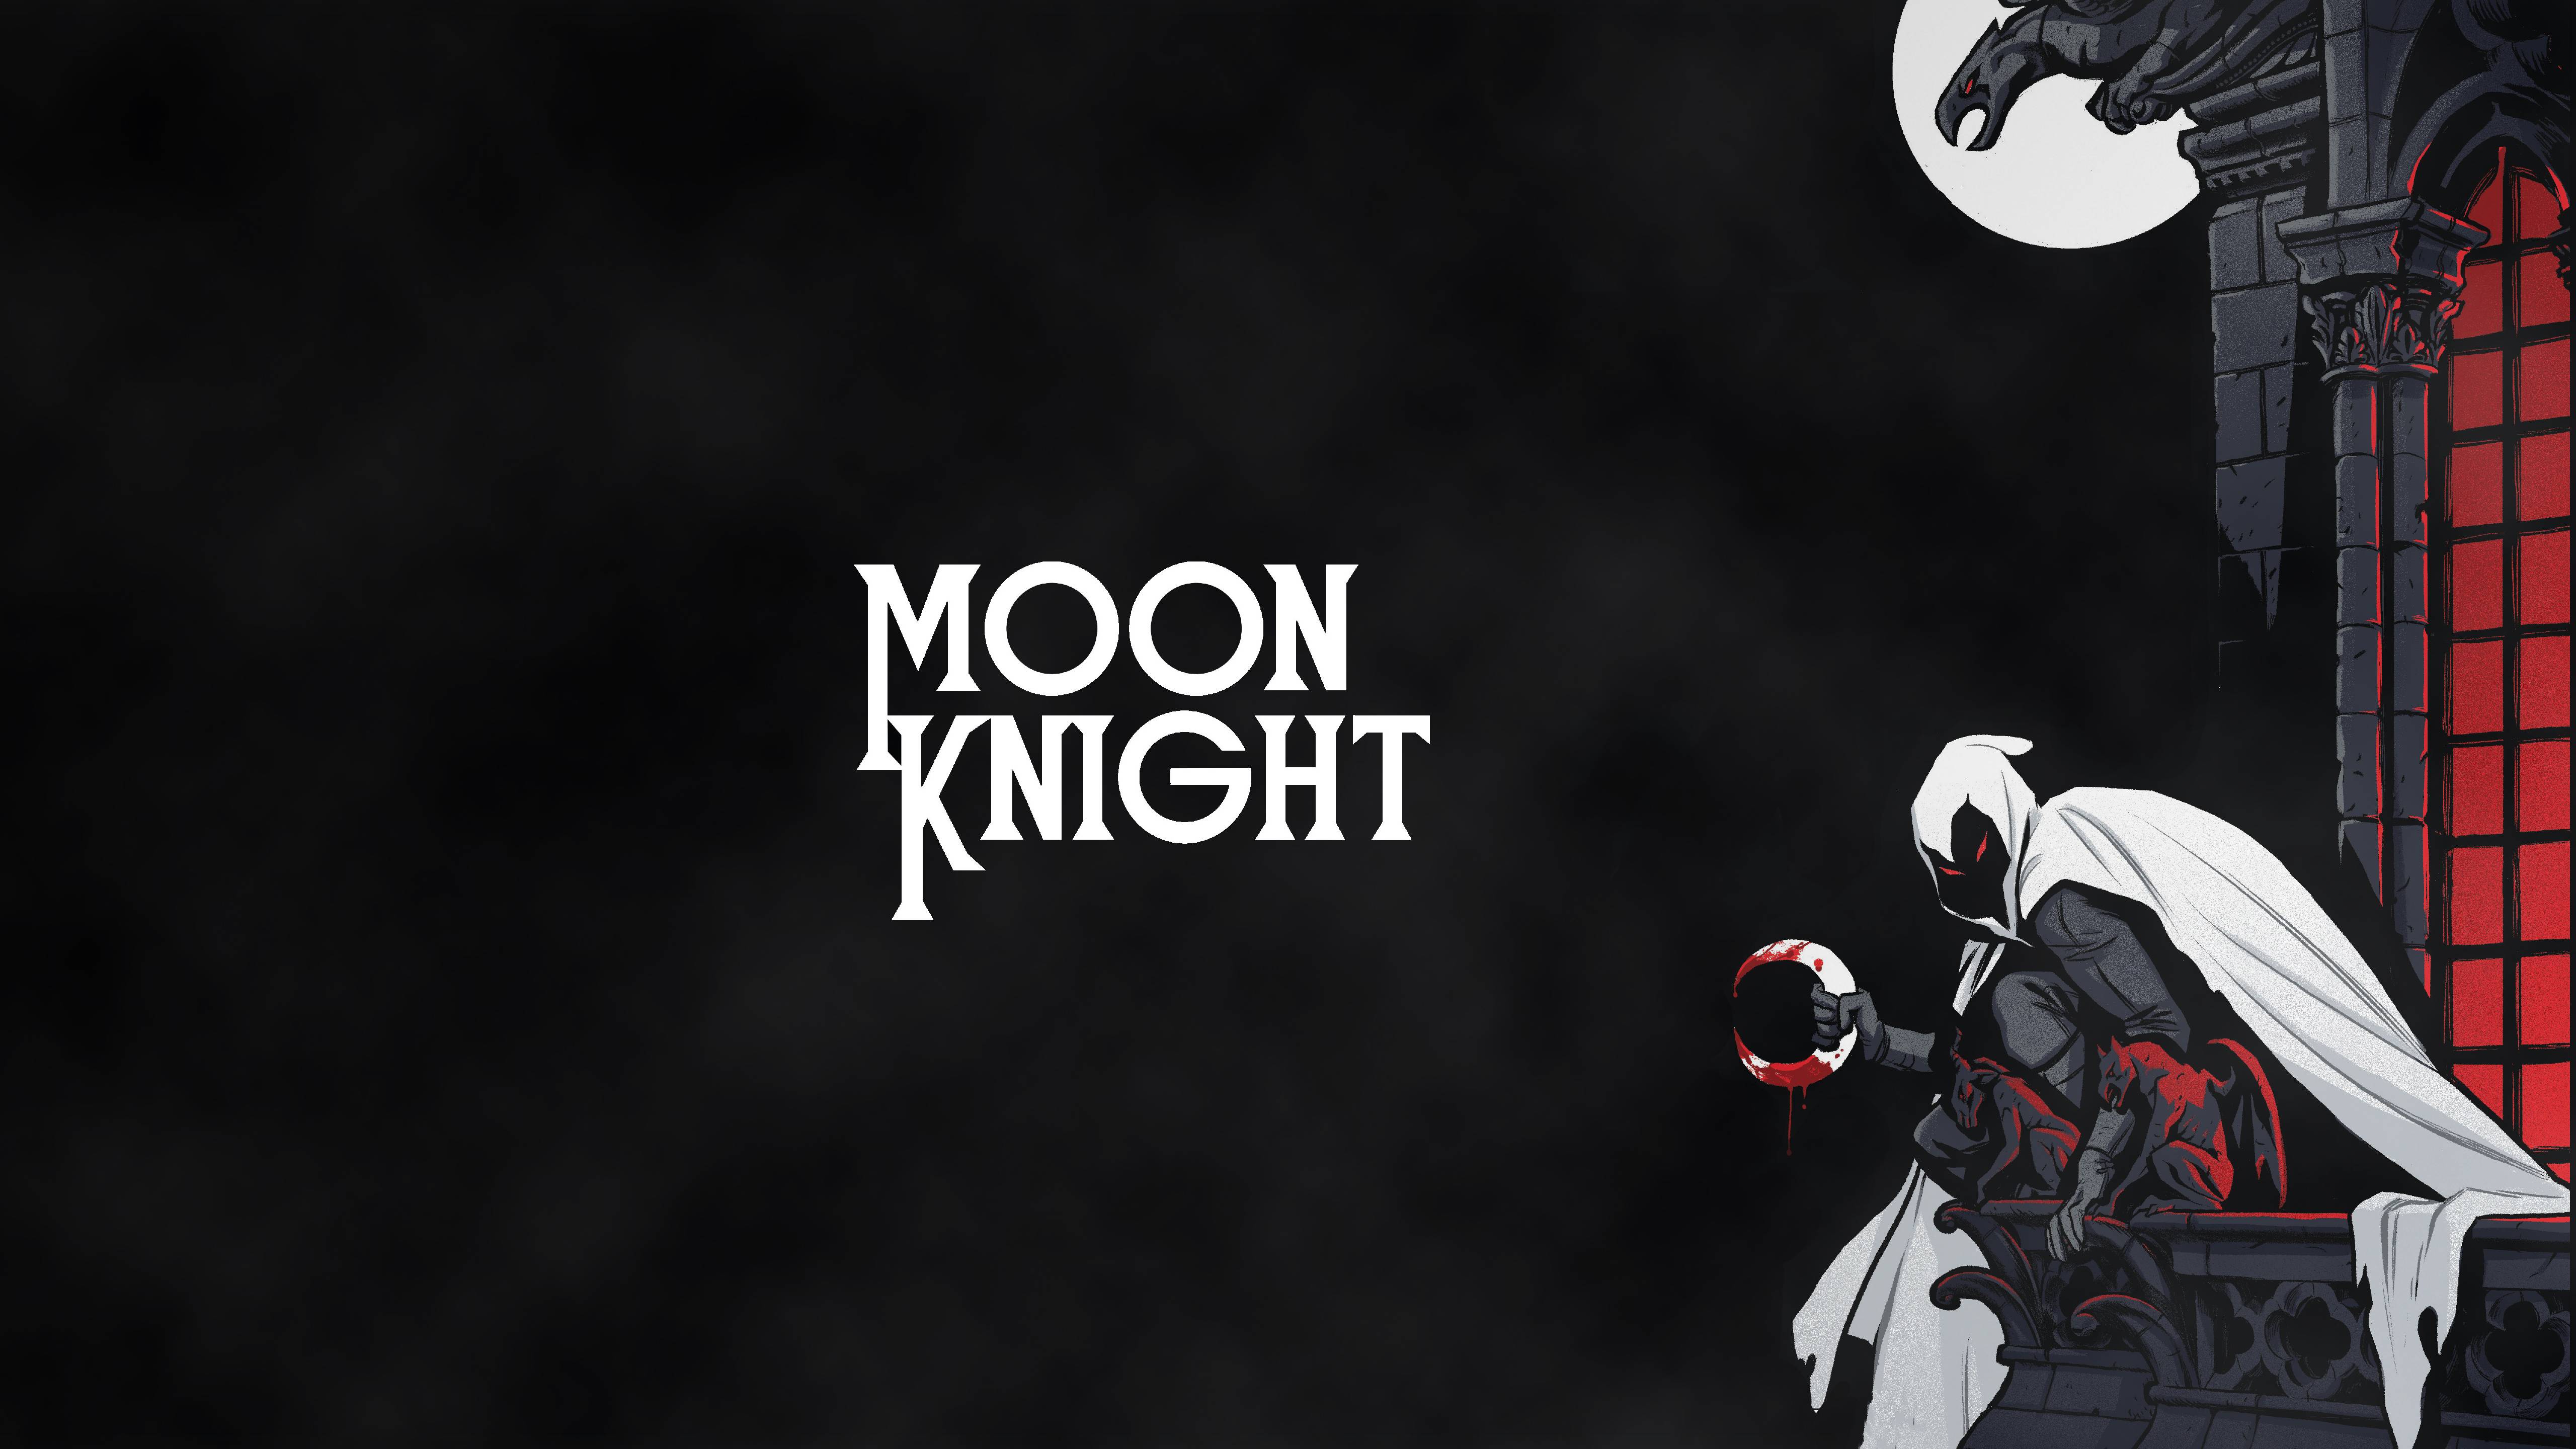 Minimalist Moon Knight Wallpapers - Top Free Minimalist Moon Knight